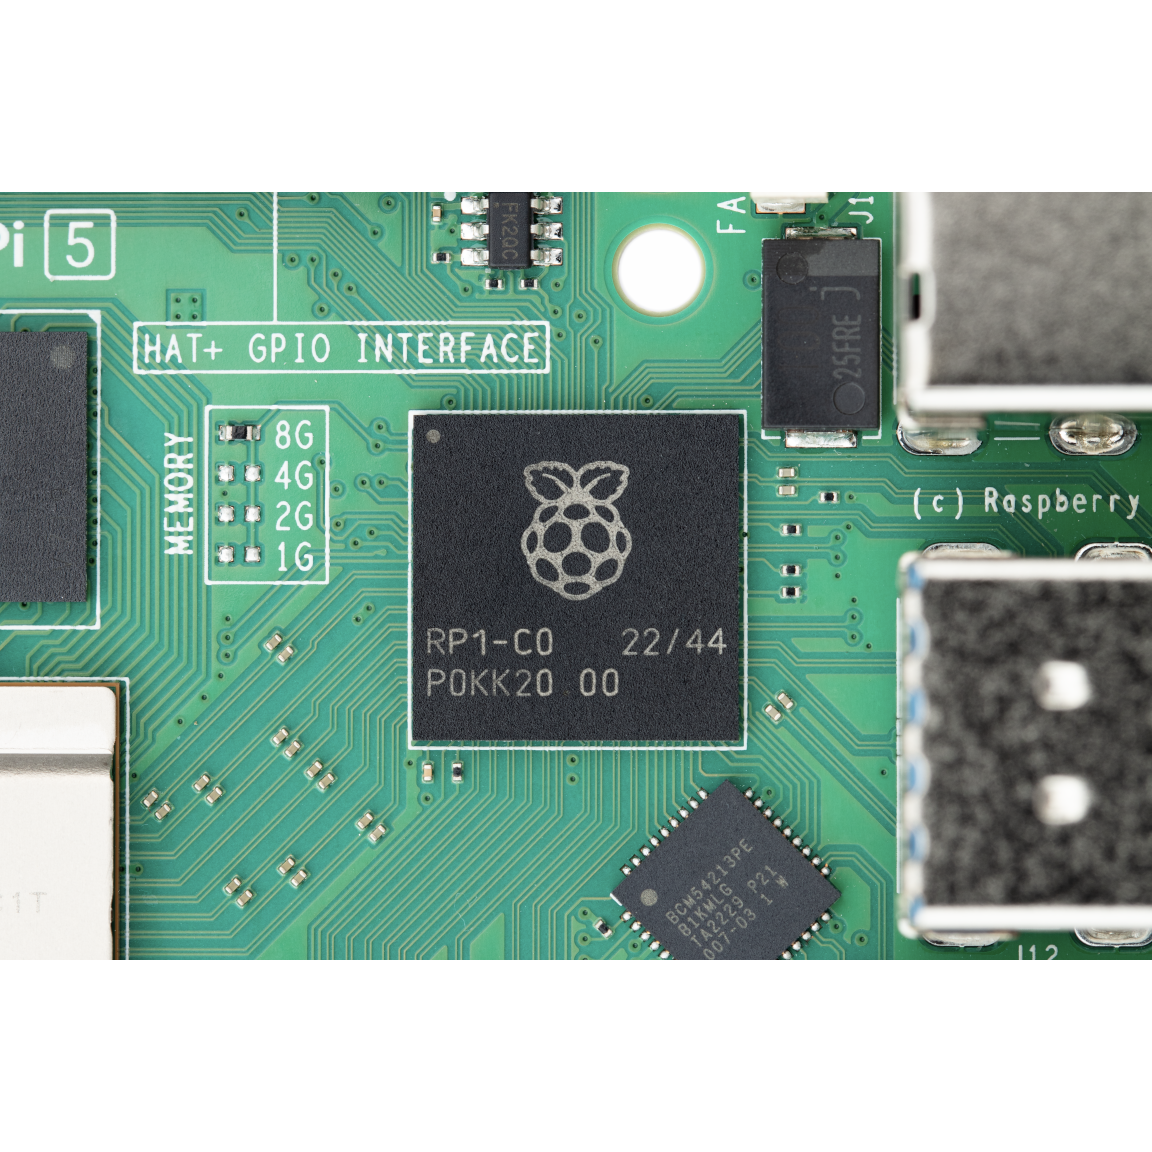 Raspberry Pi 5 Kit, Options for Kits and 4GB/8GB RAM, BCM2712 processor,  2.4GHz quad